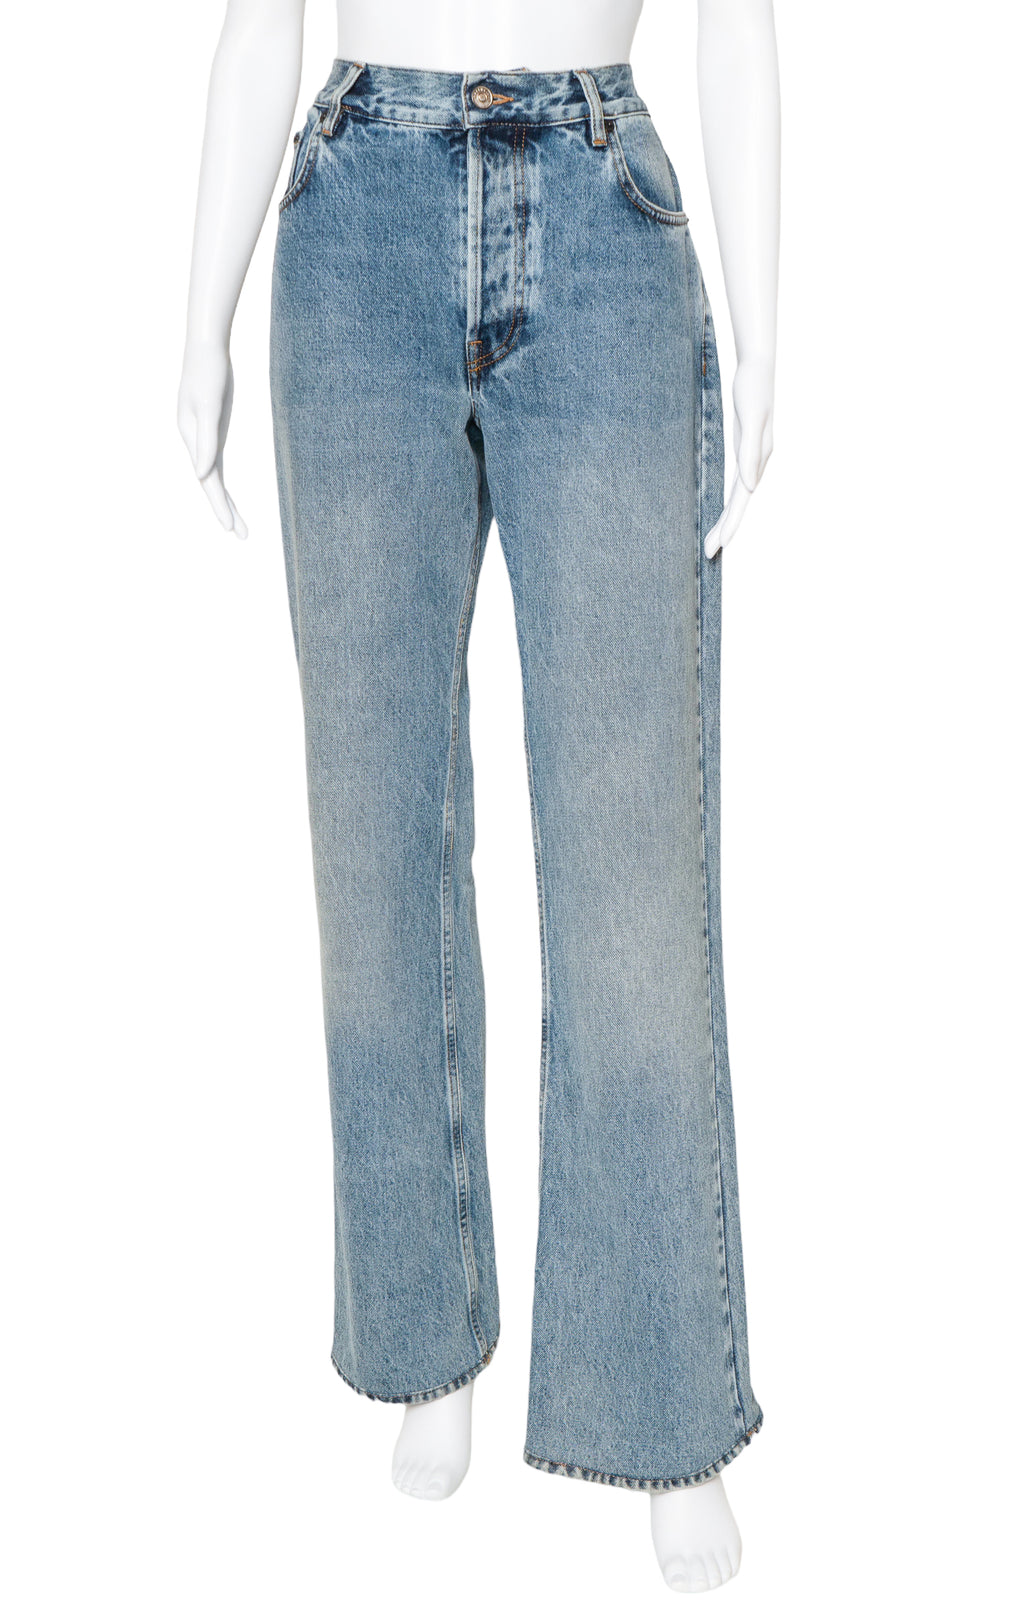 BALENCIAGA Jeans Size: No size tags, fit like US 25/0